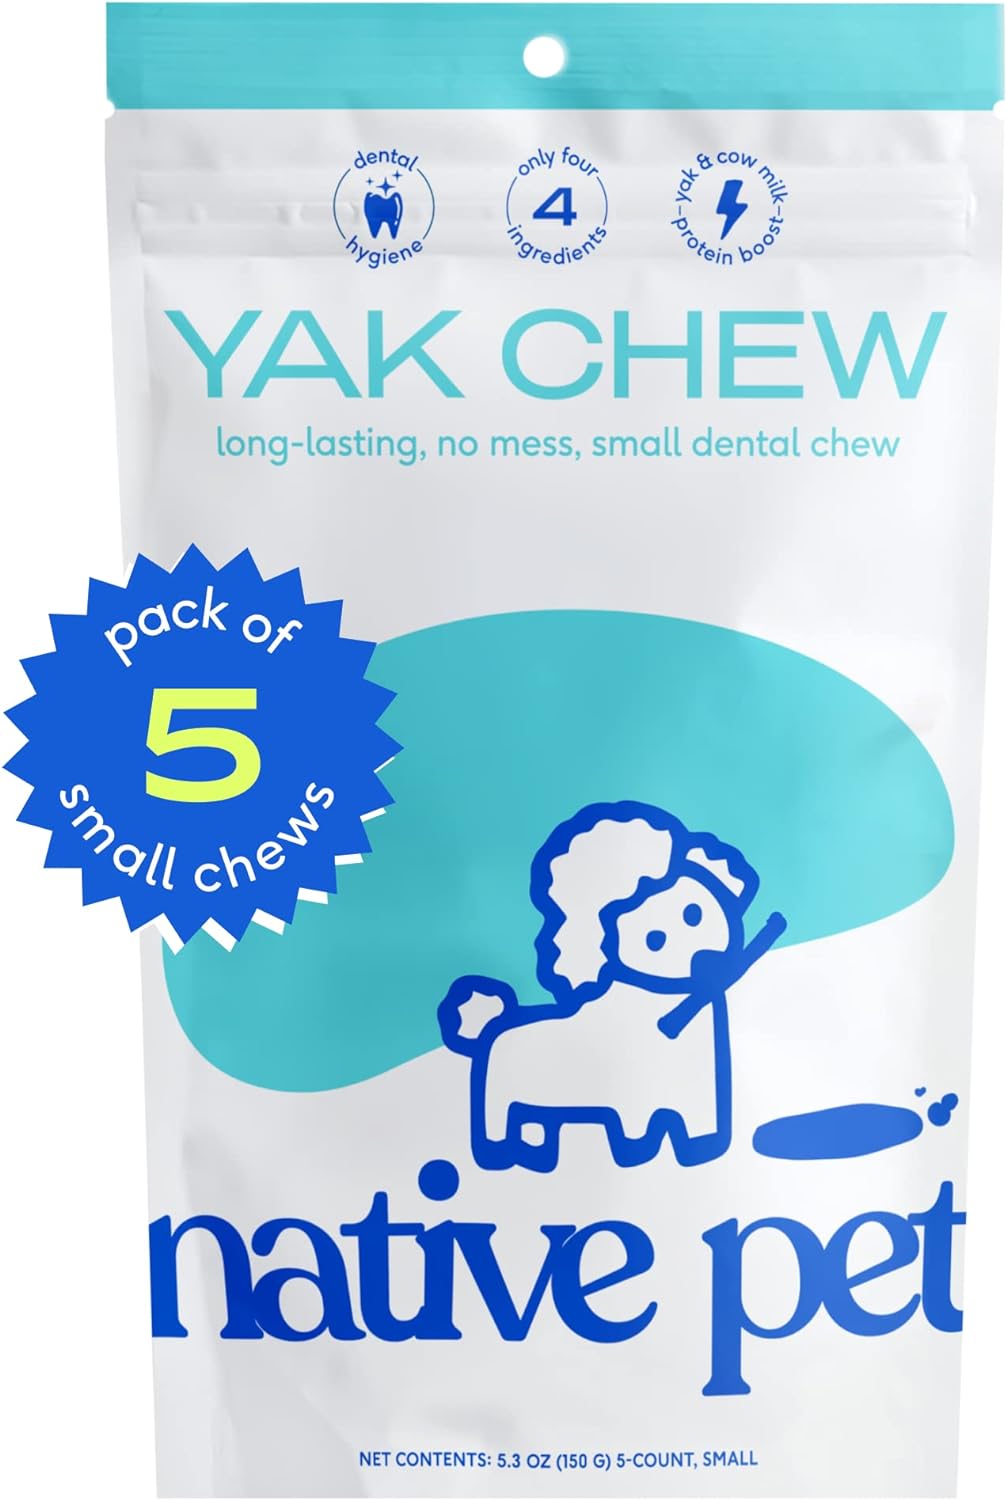 Native Pet Yak Chews (5 Small Chews)